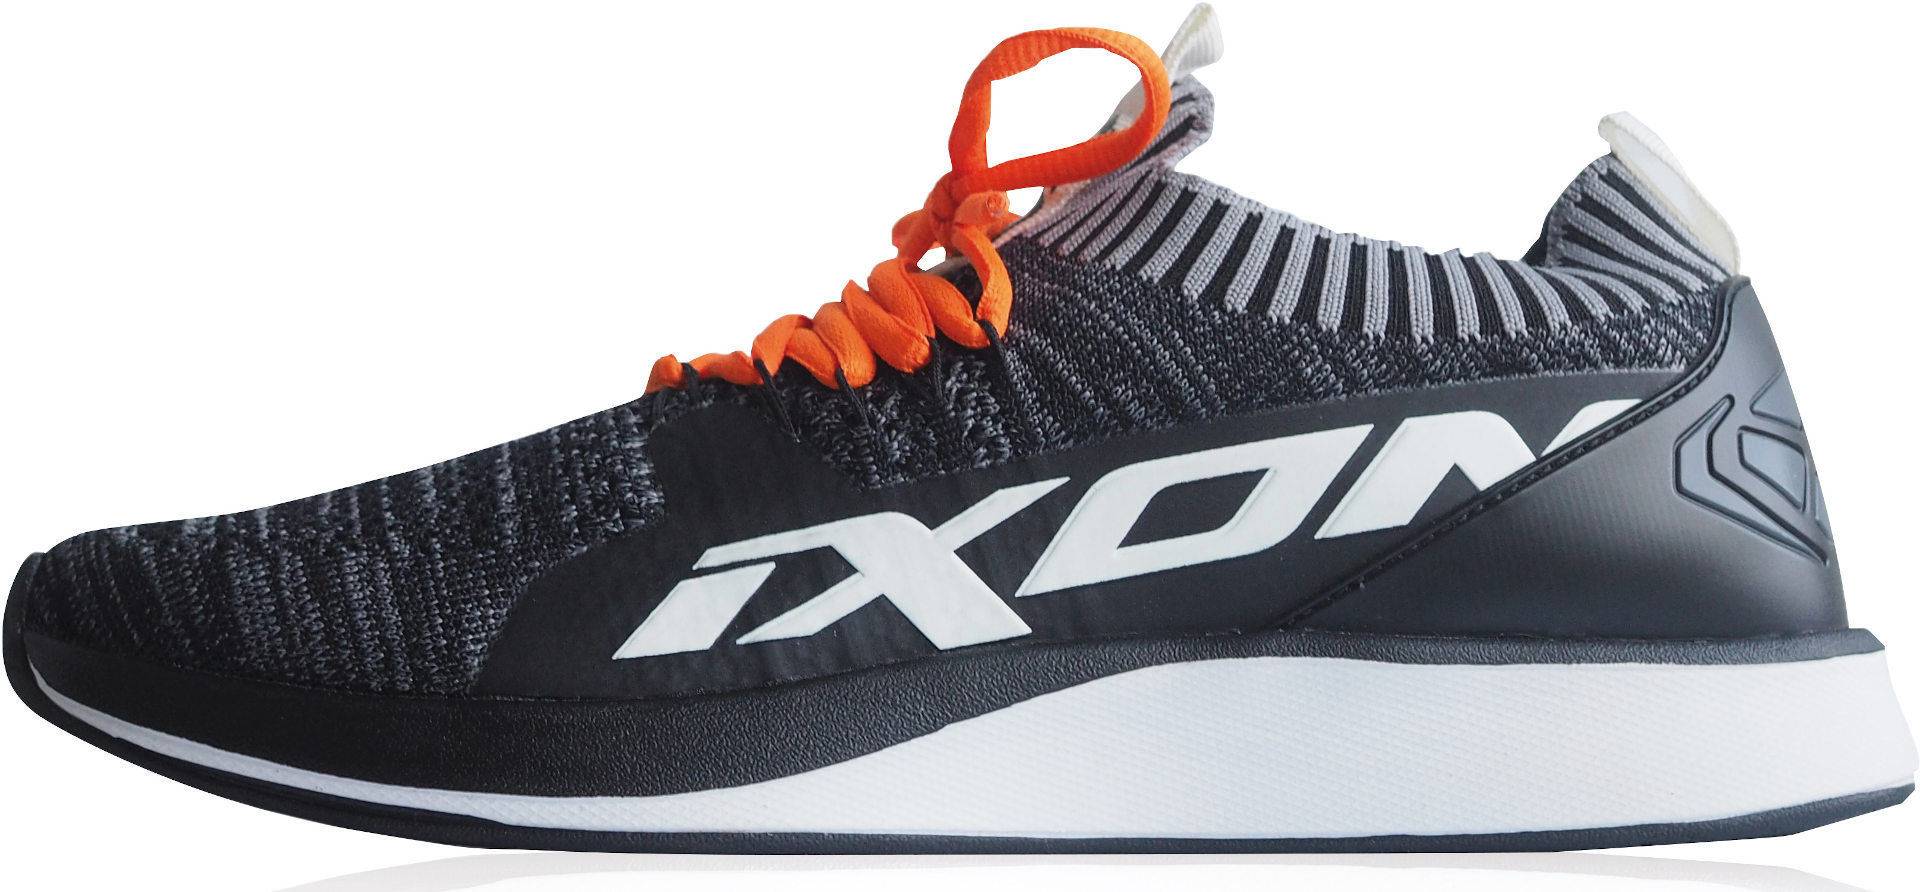 Ixon Paddock Schuhe, schwarz-weiss-orange, Größe 38, schwarz-weiss-orange, Größe 38